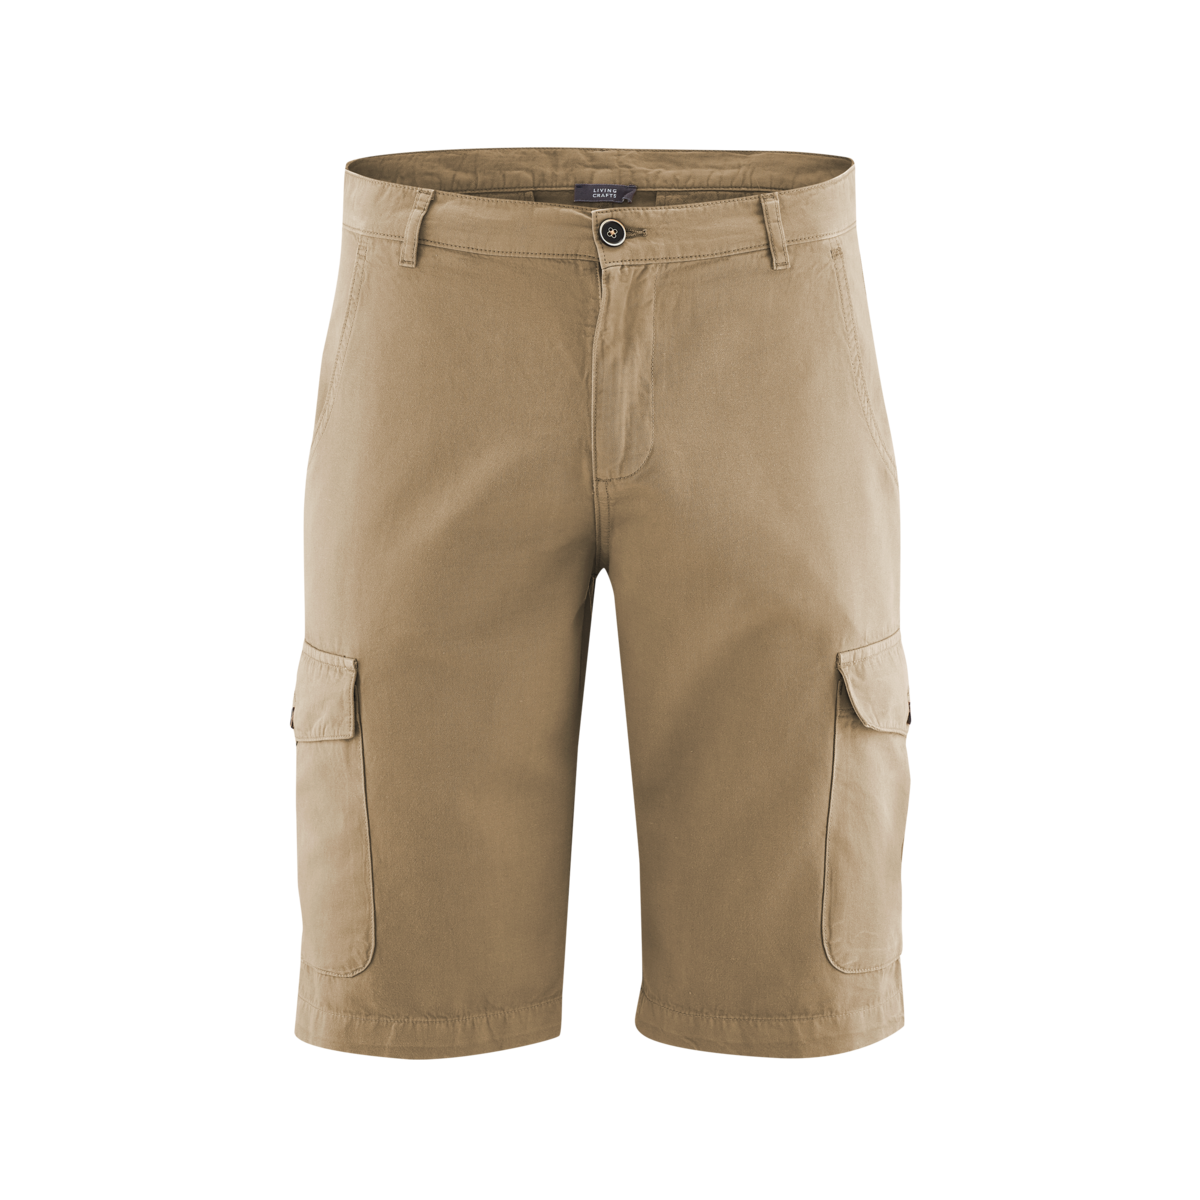 Brown Bermuda shorts, CEDRIC